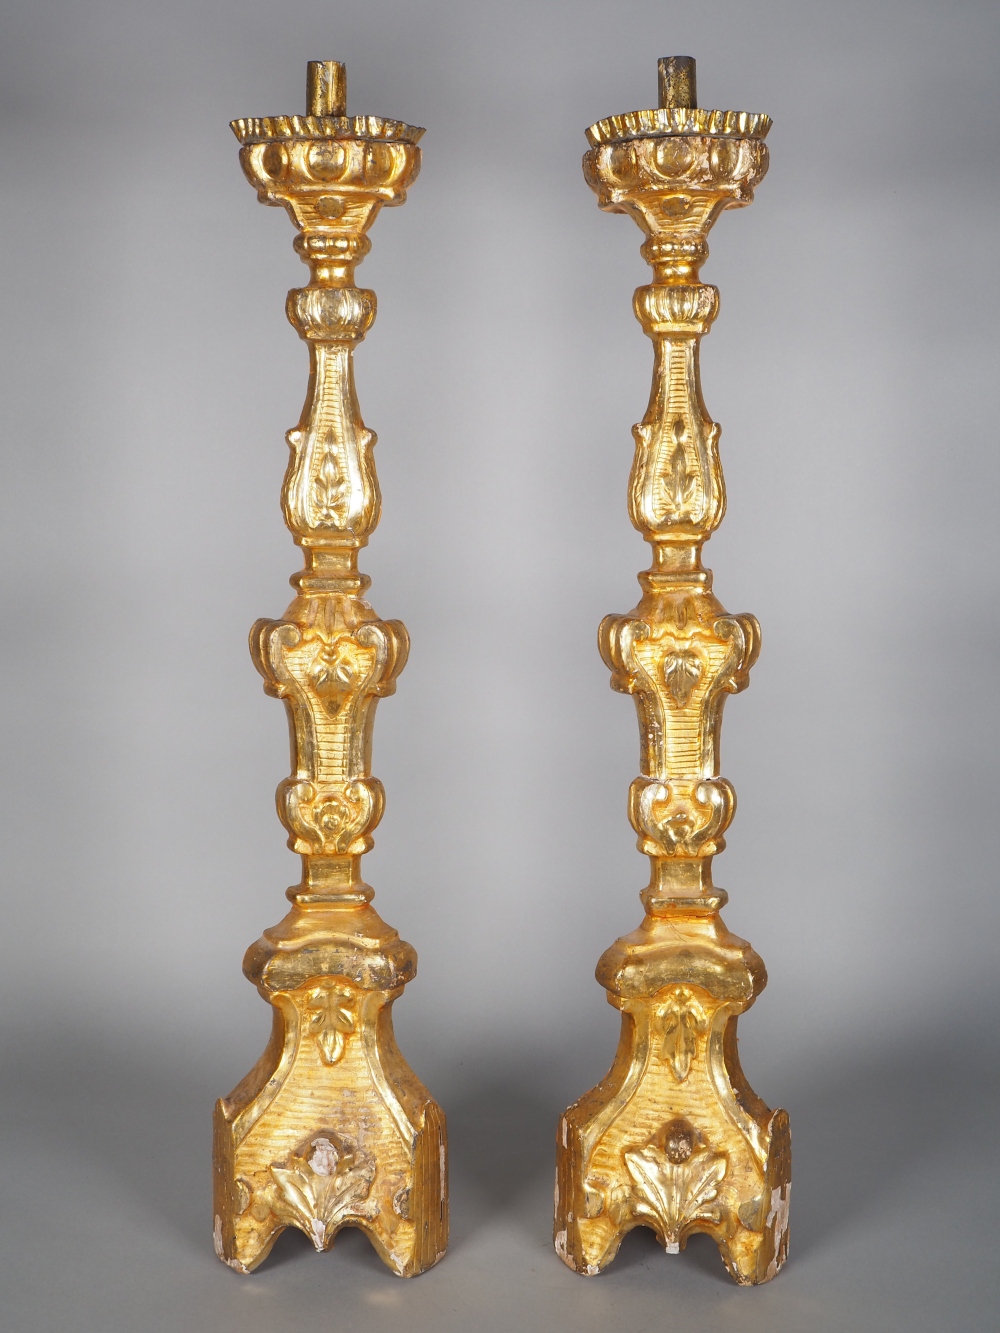 Pair of baroque altar candlesticks, 18th c.